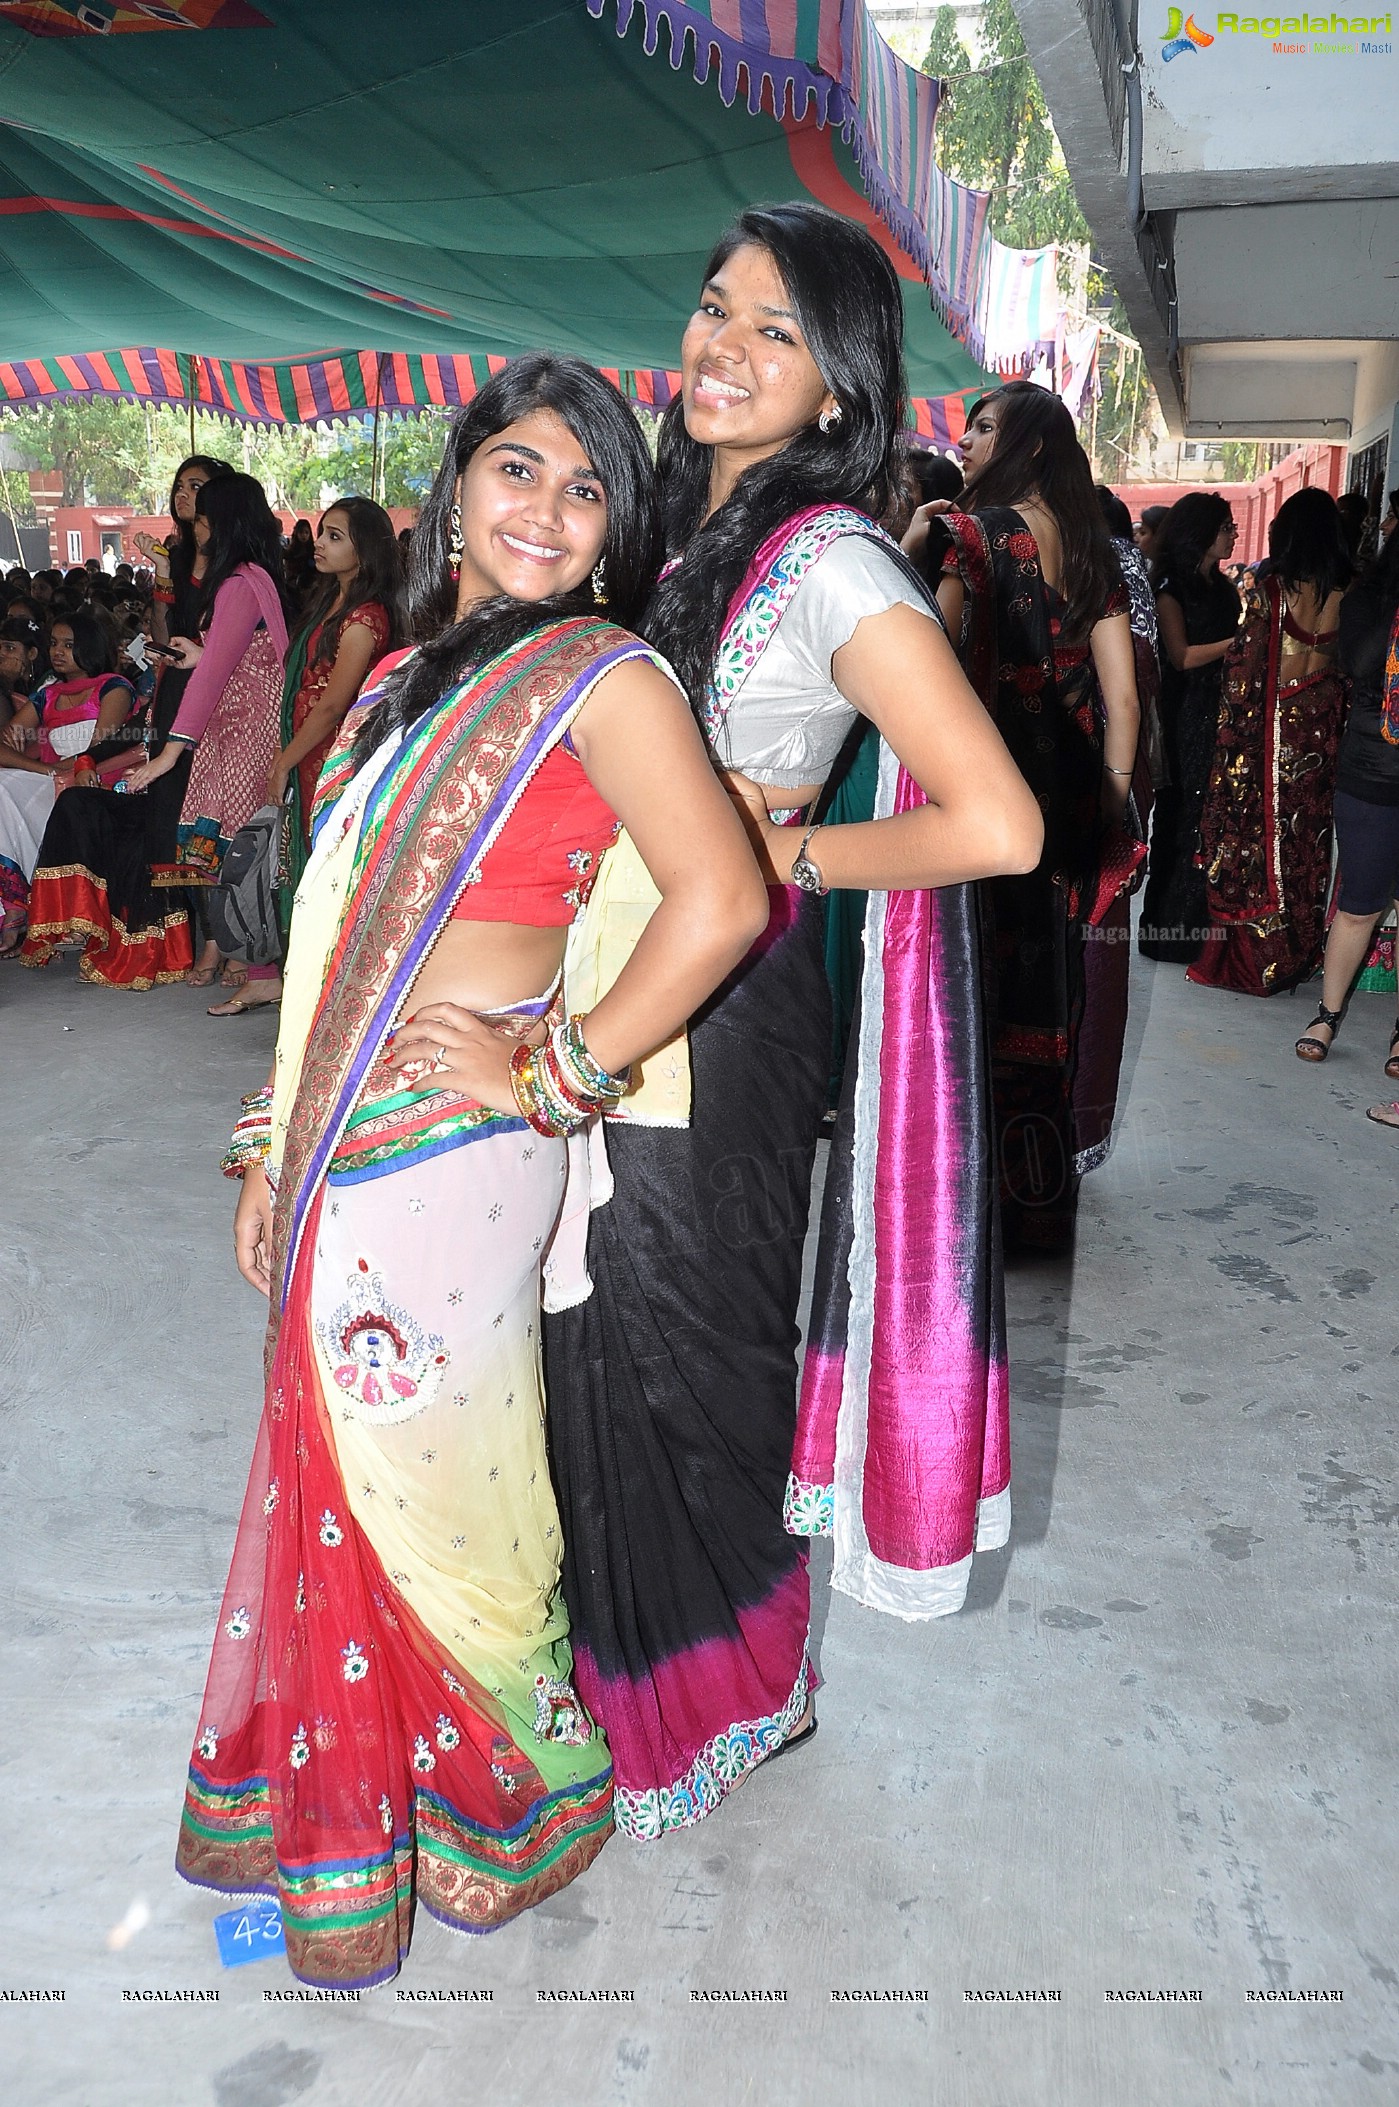 Villa Marie Alvida 2013 Celebrations, Hyderabad